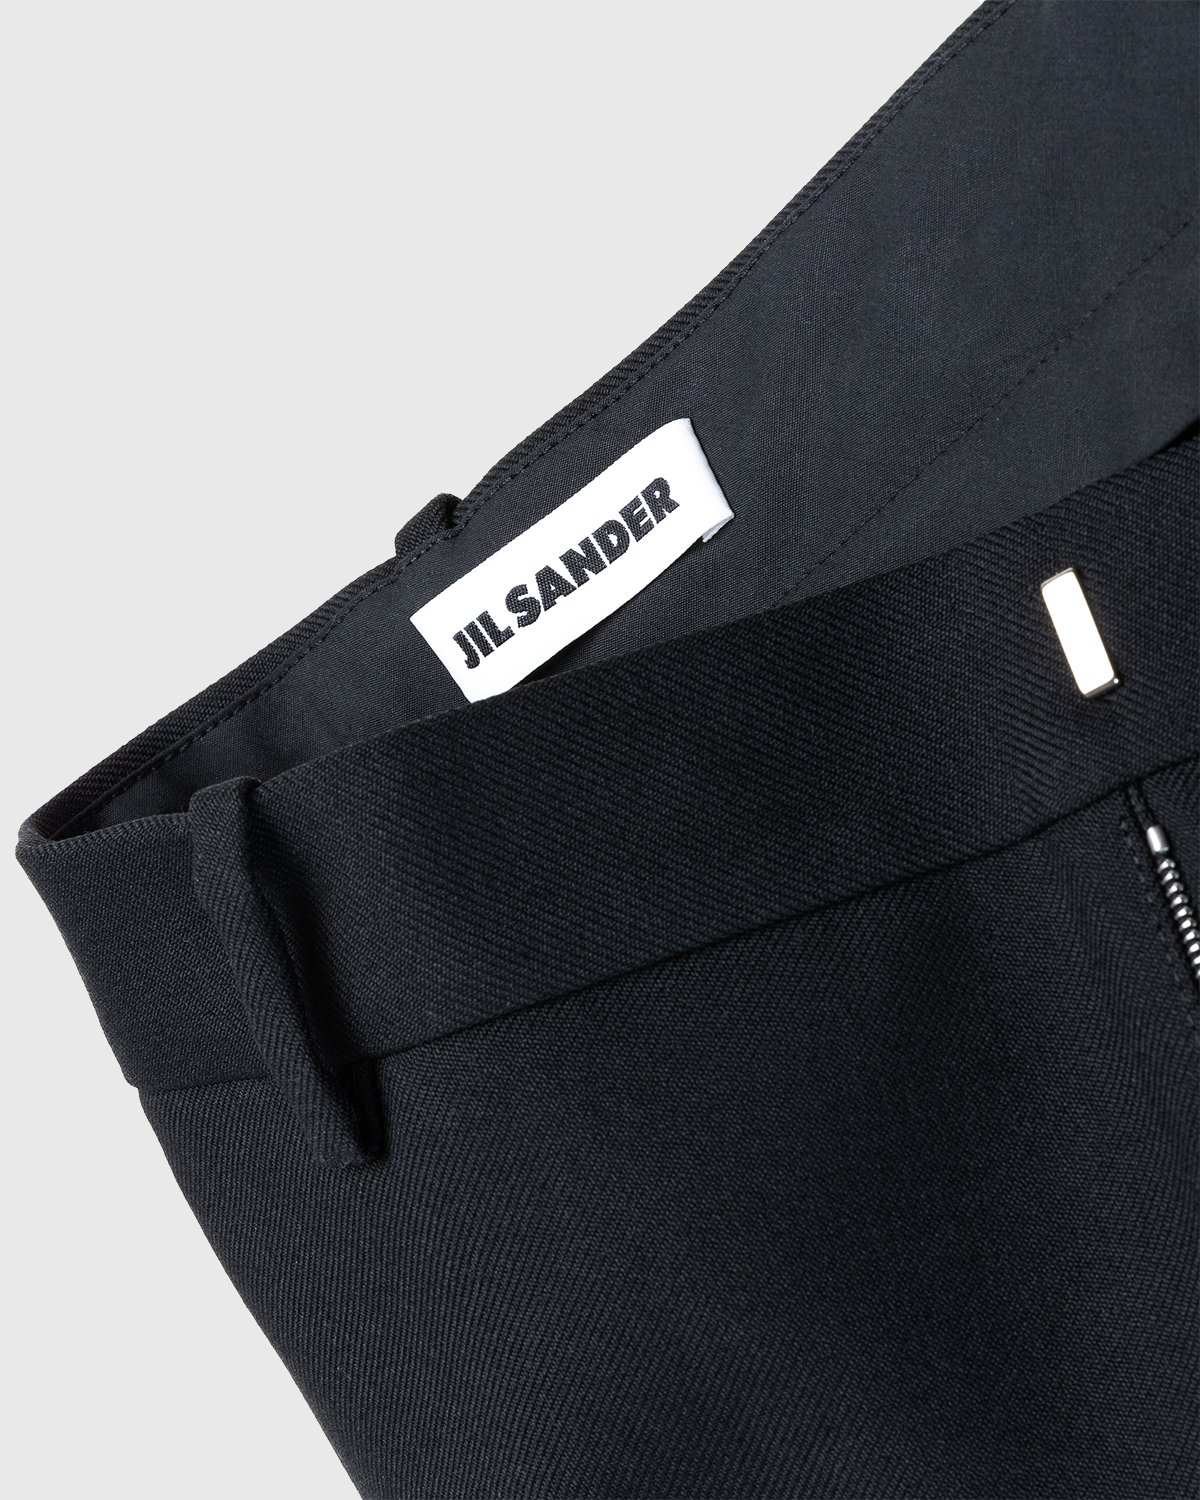 Jil Sander - Zip Pocket Trousers Black - Clothing - Black - Image 5